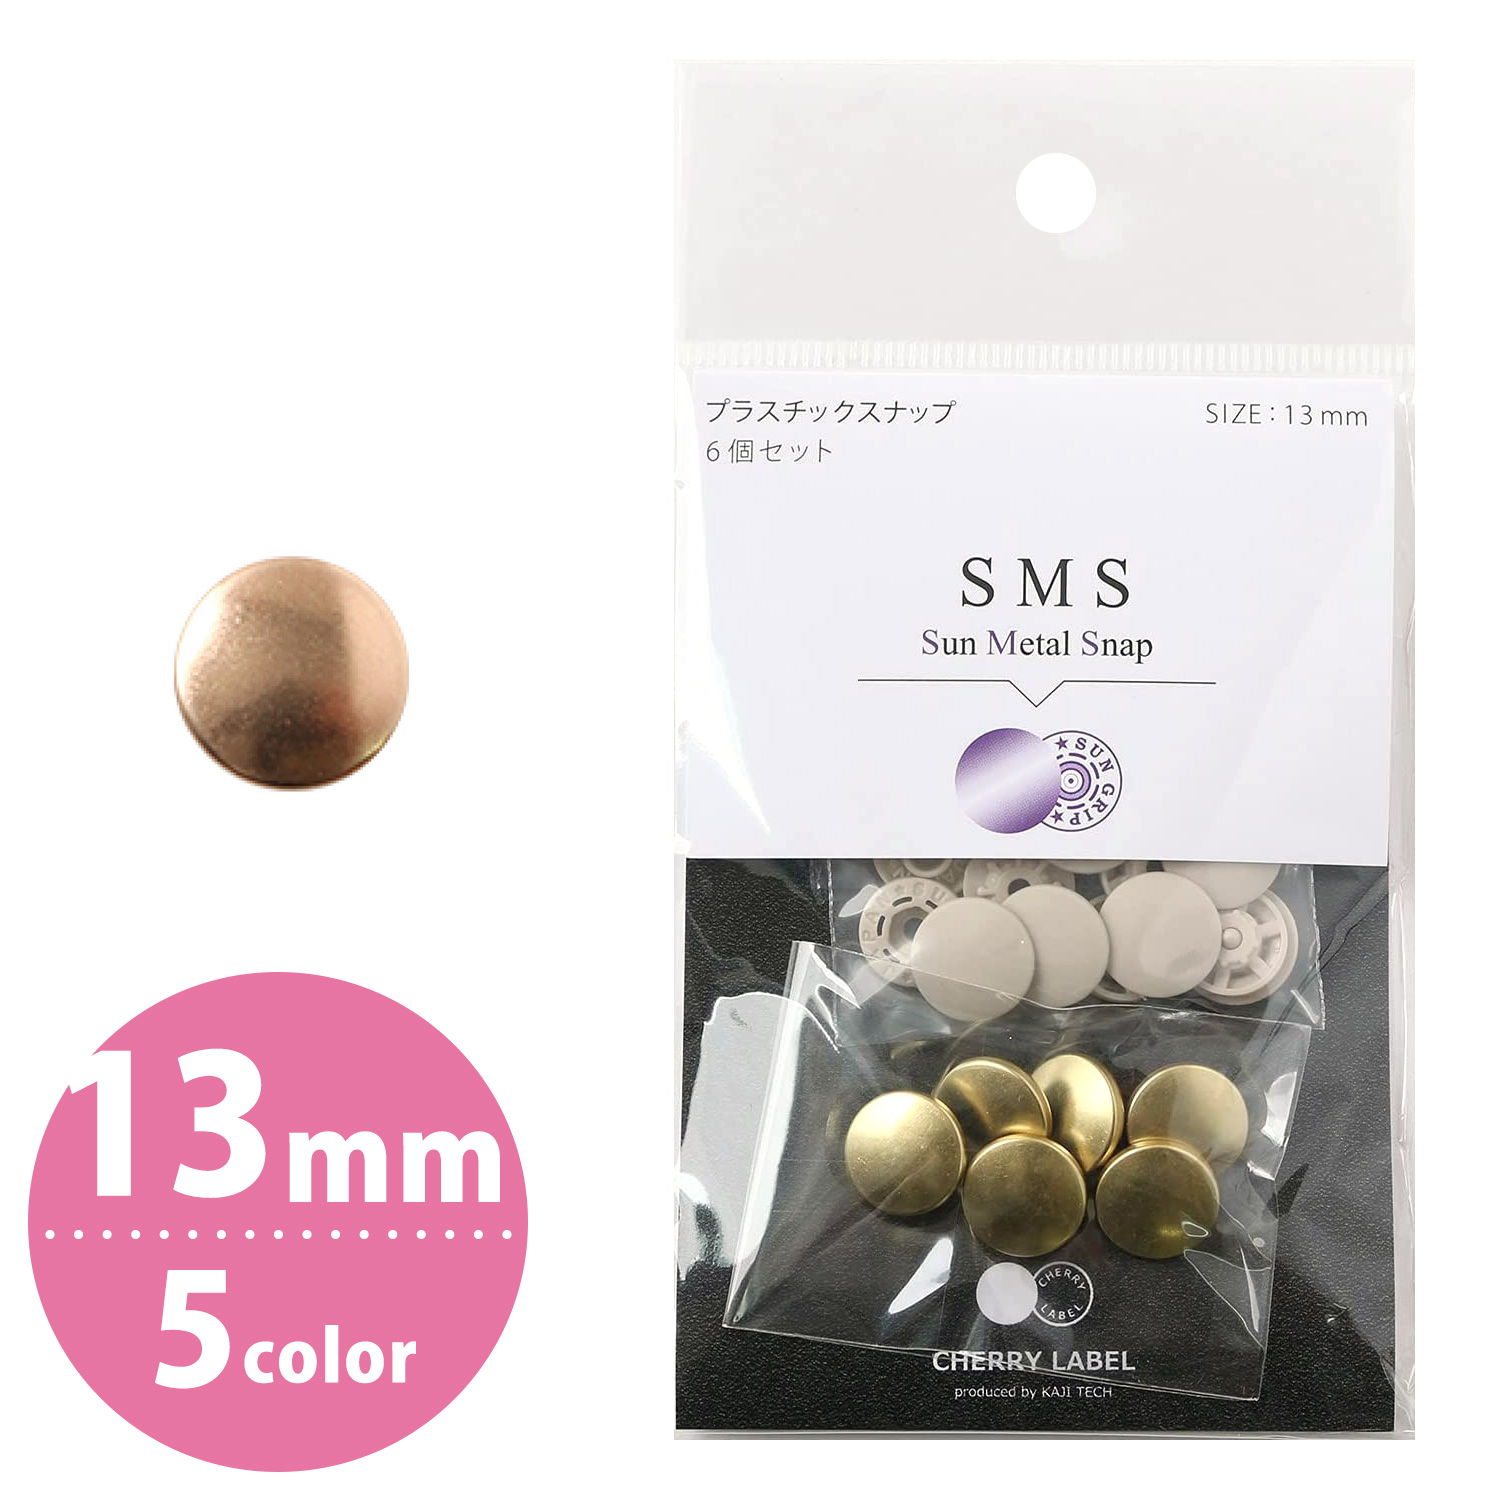 SMS13 SUN METAL SNAP メタル風スナップ 13mm 6組 (袋)